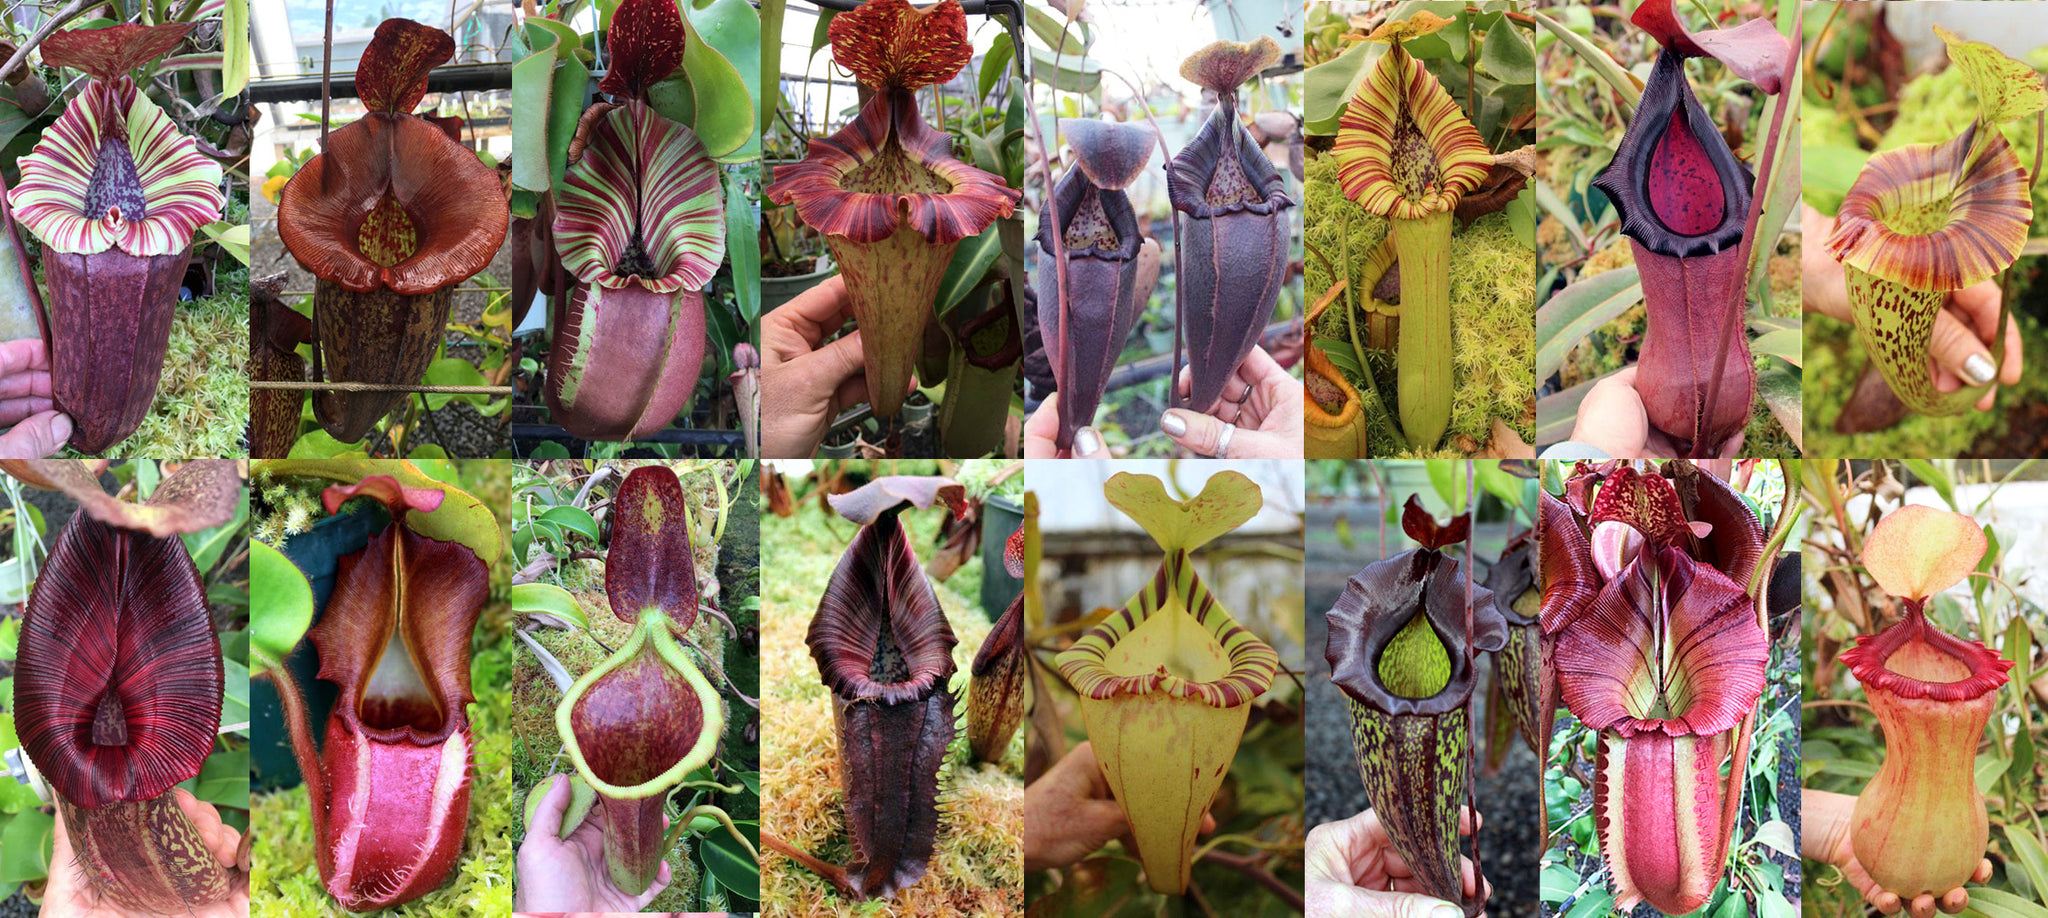 Exotica Plants import - Redleaf Exotics Nepenthes for sale - carnivorous Plants